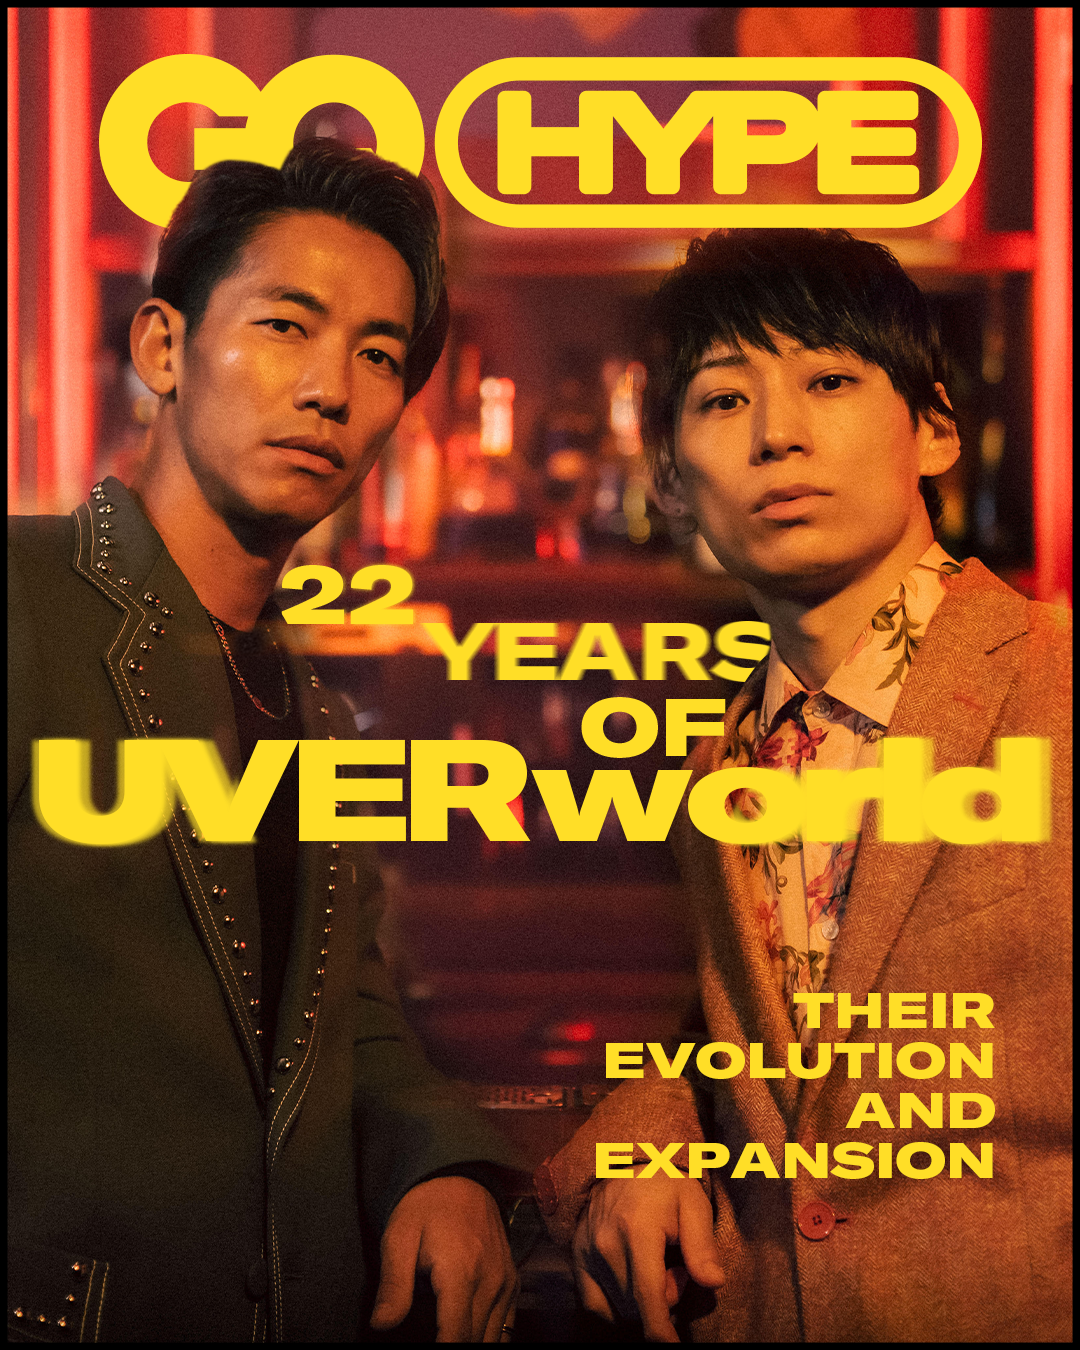 【Web Magazine】「GQ HYPE」TAKUYA∞・真太郎 撮り下ろし写真＆インタビュー